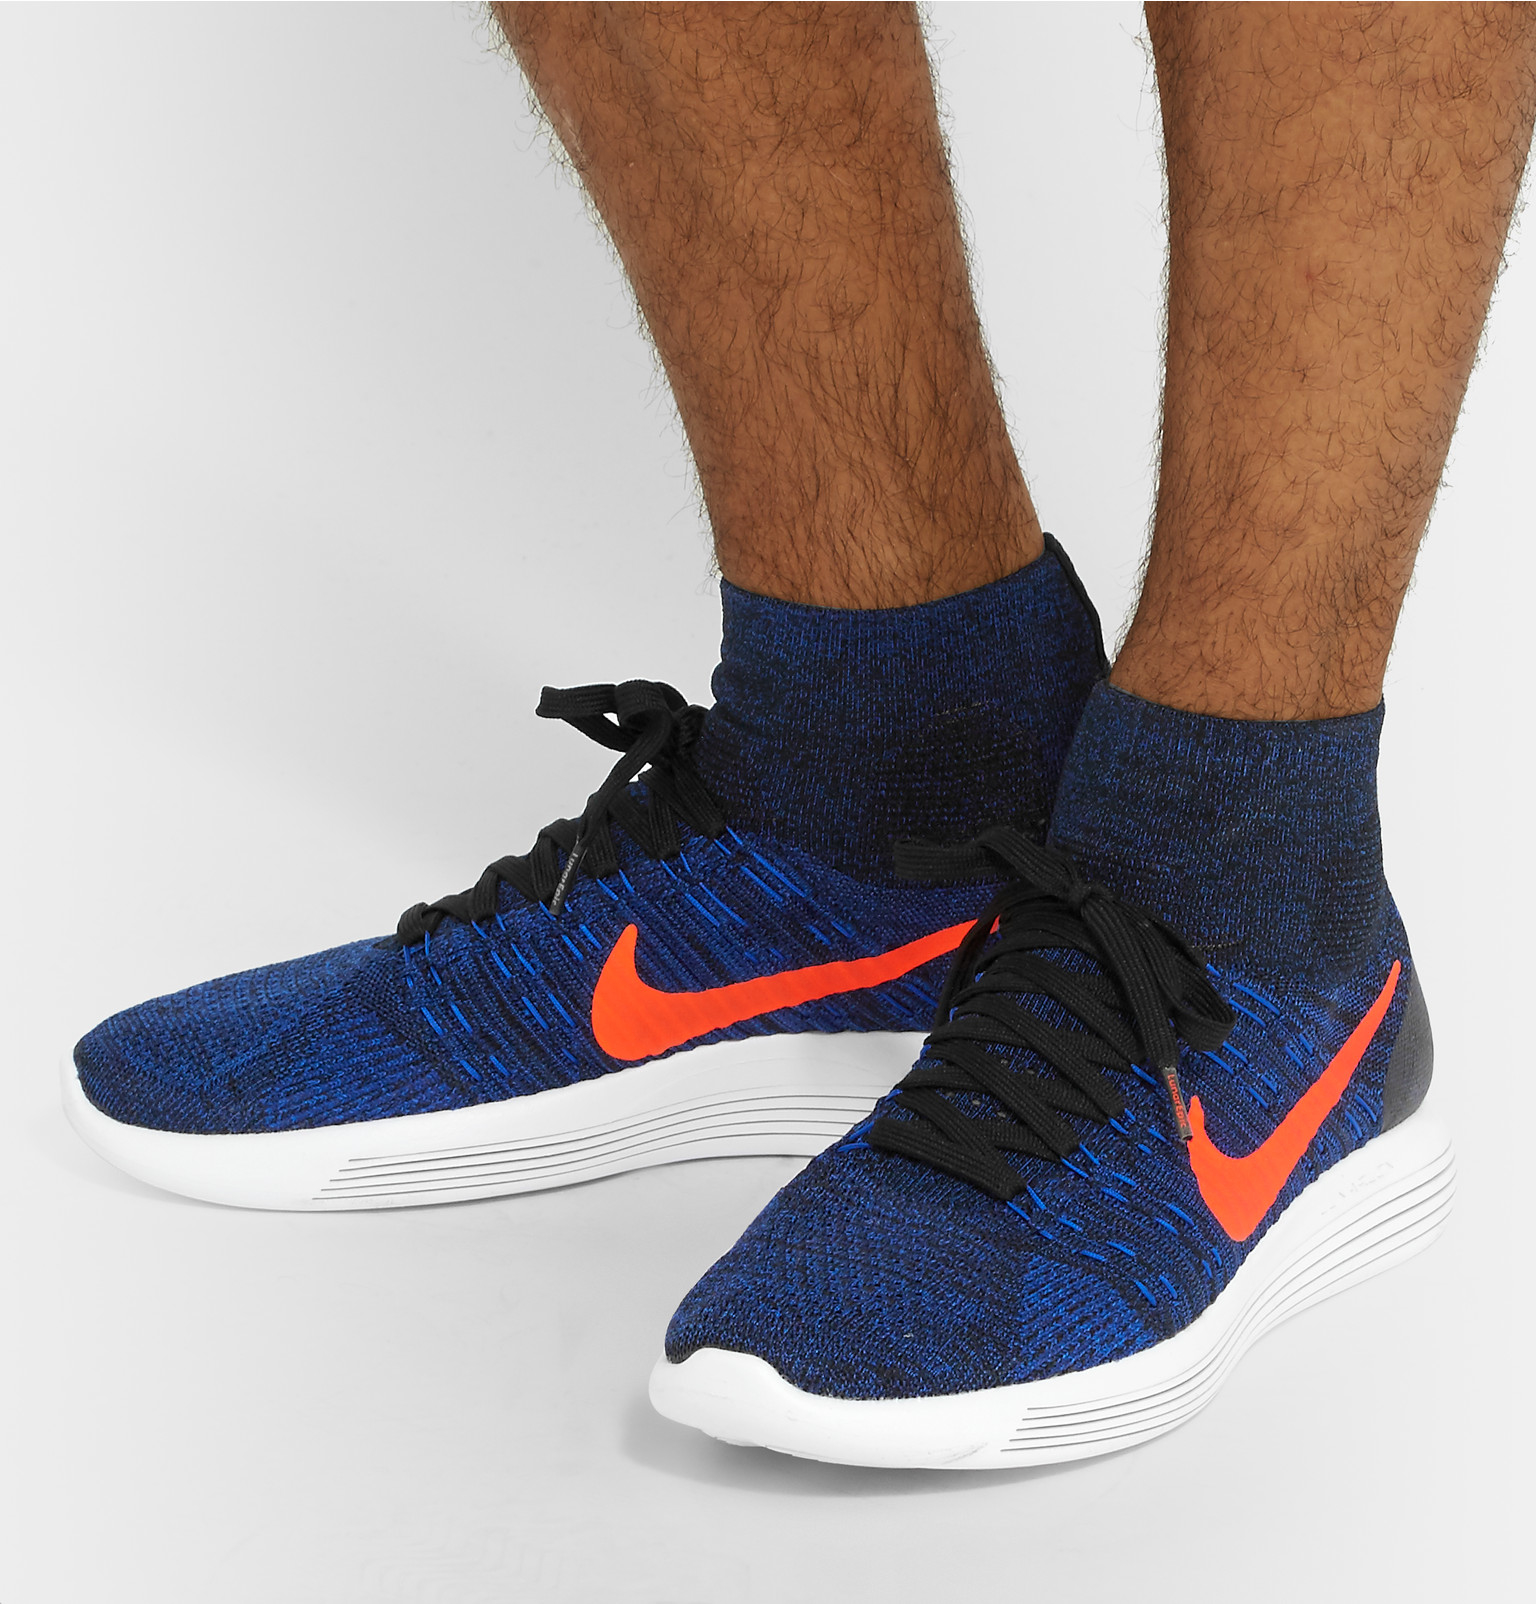 Nike Lunarepic Flyknit High-top Sneakers in Blue for Men - Lyst